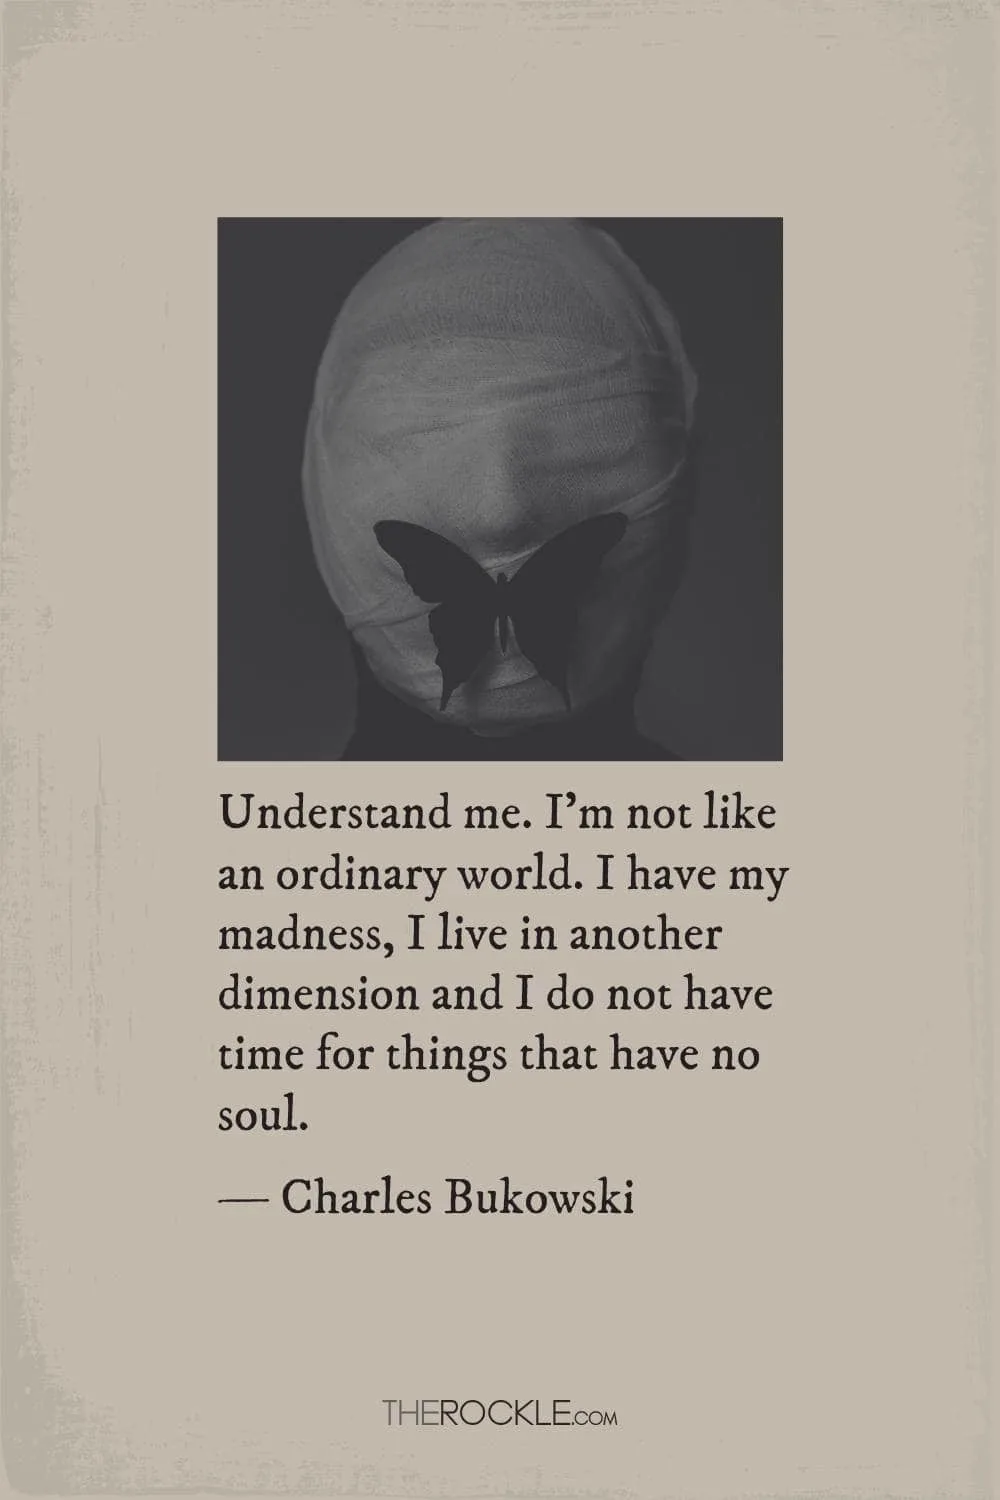 Bukowski on individuality and depth